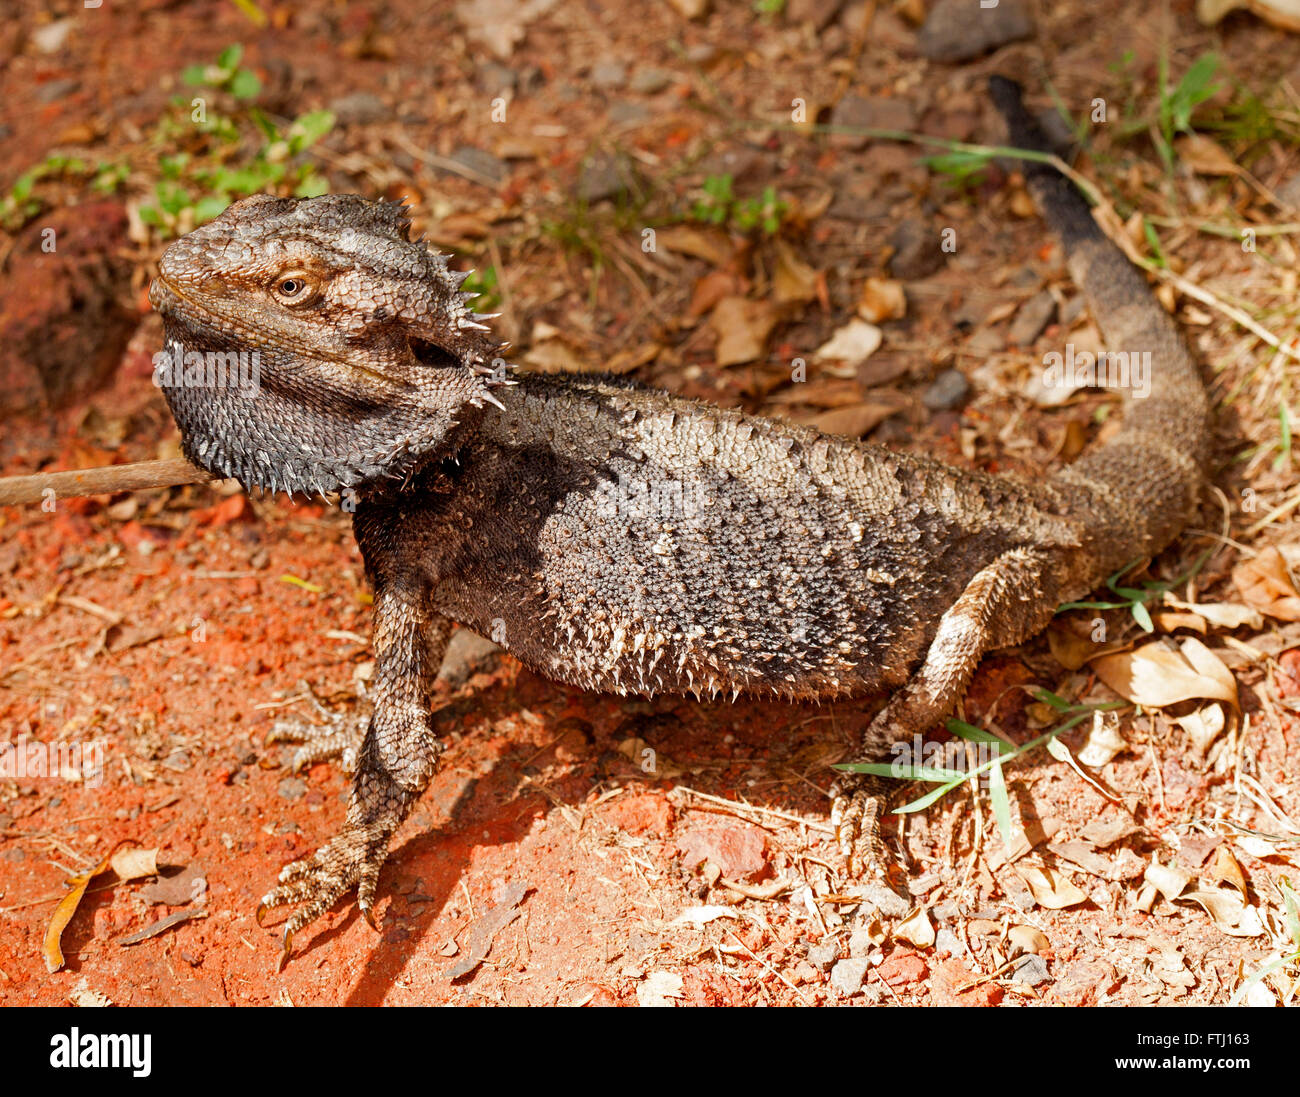 Australian bearded dragon lizard, Pogona barbata with grey spiny beard and body extended in threatening pose on red soil in garden Stock Photo